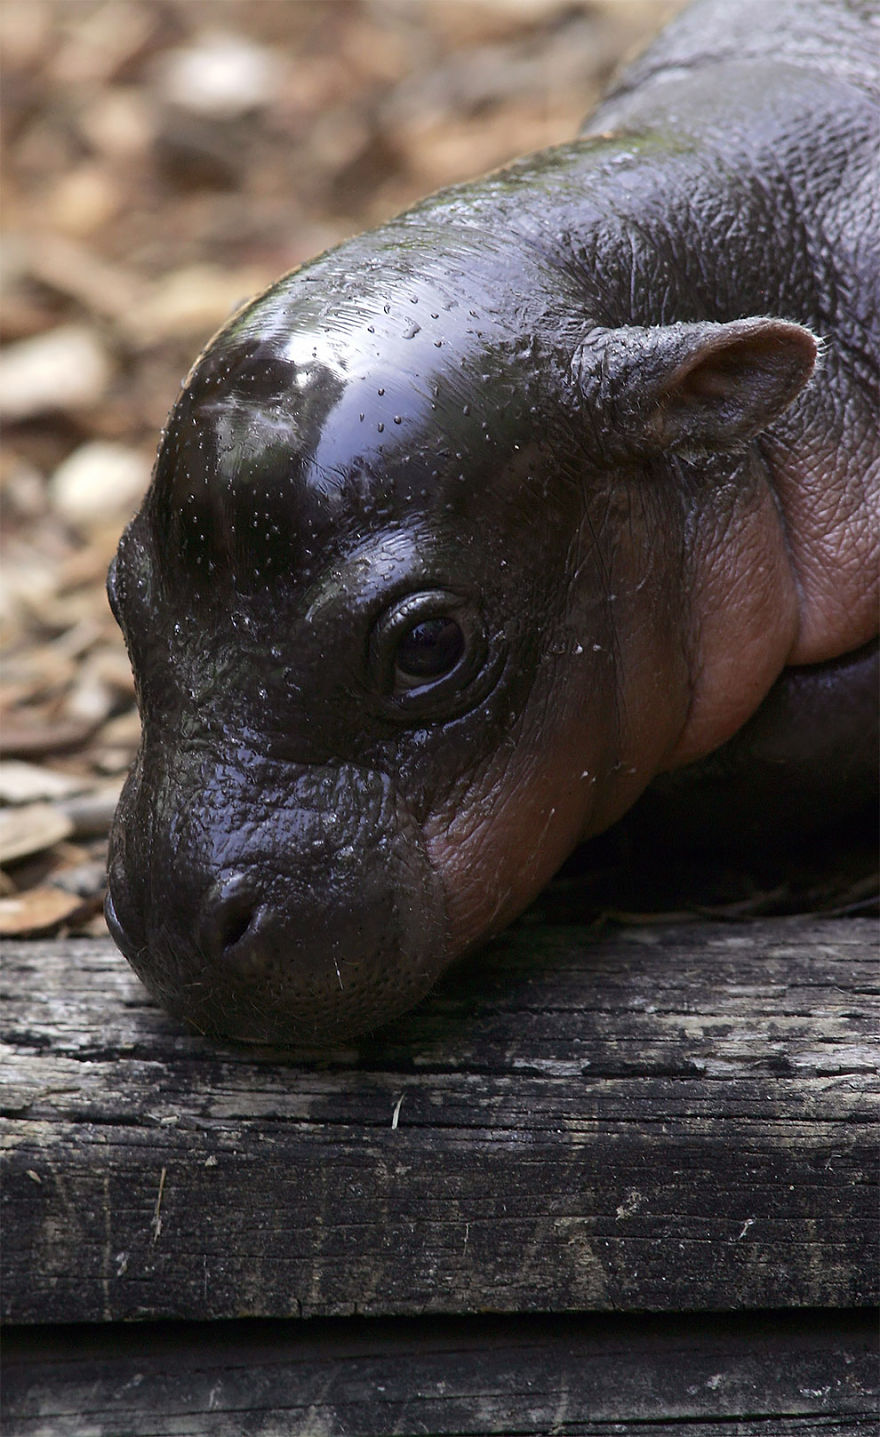 Baby Pygmy Hippopotamus Is Ridiculously Cute!